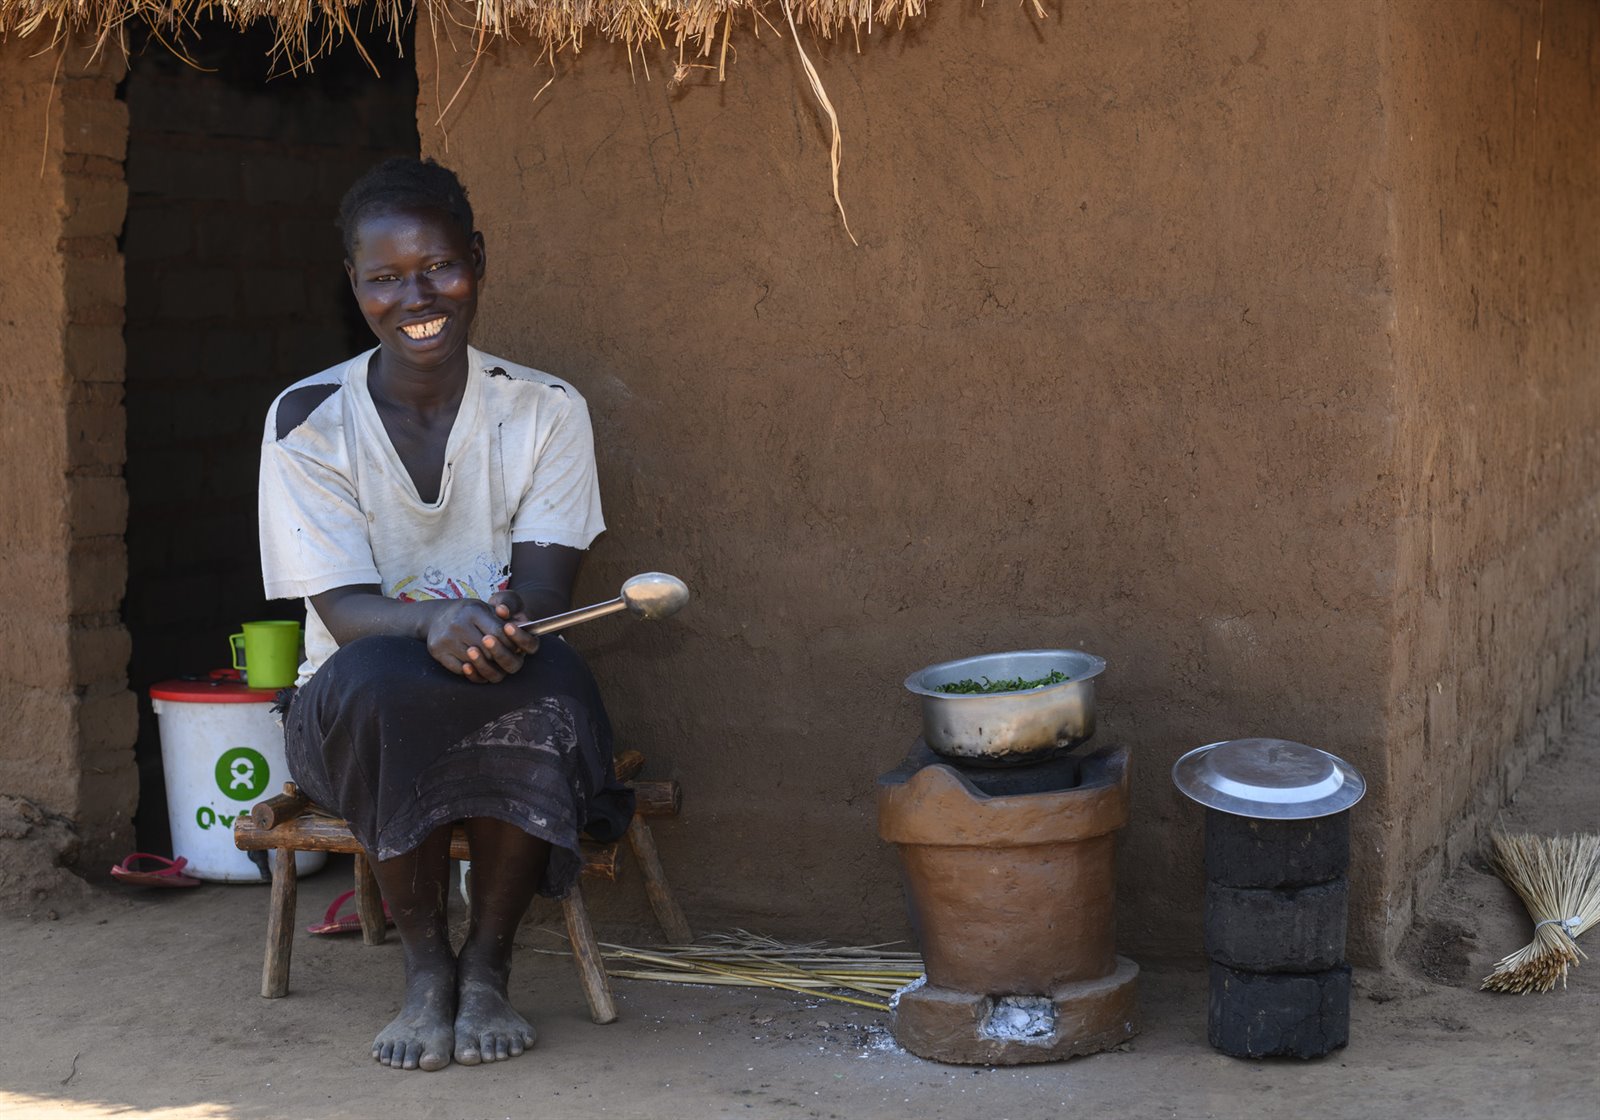 Oxfam-Novib-Uganda-vluchtelingen-kookpot-Emmanuel-Museruka-Oxfam-Novib-17271lpr